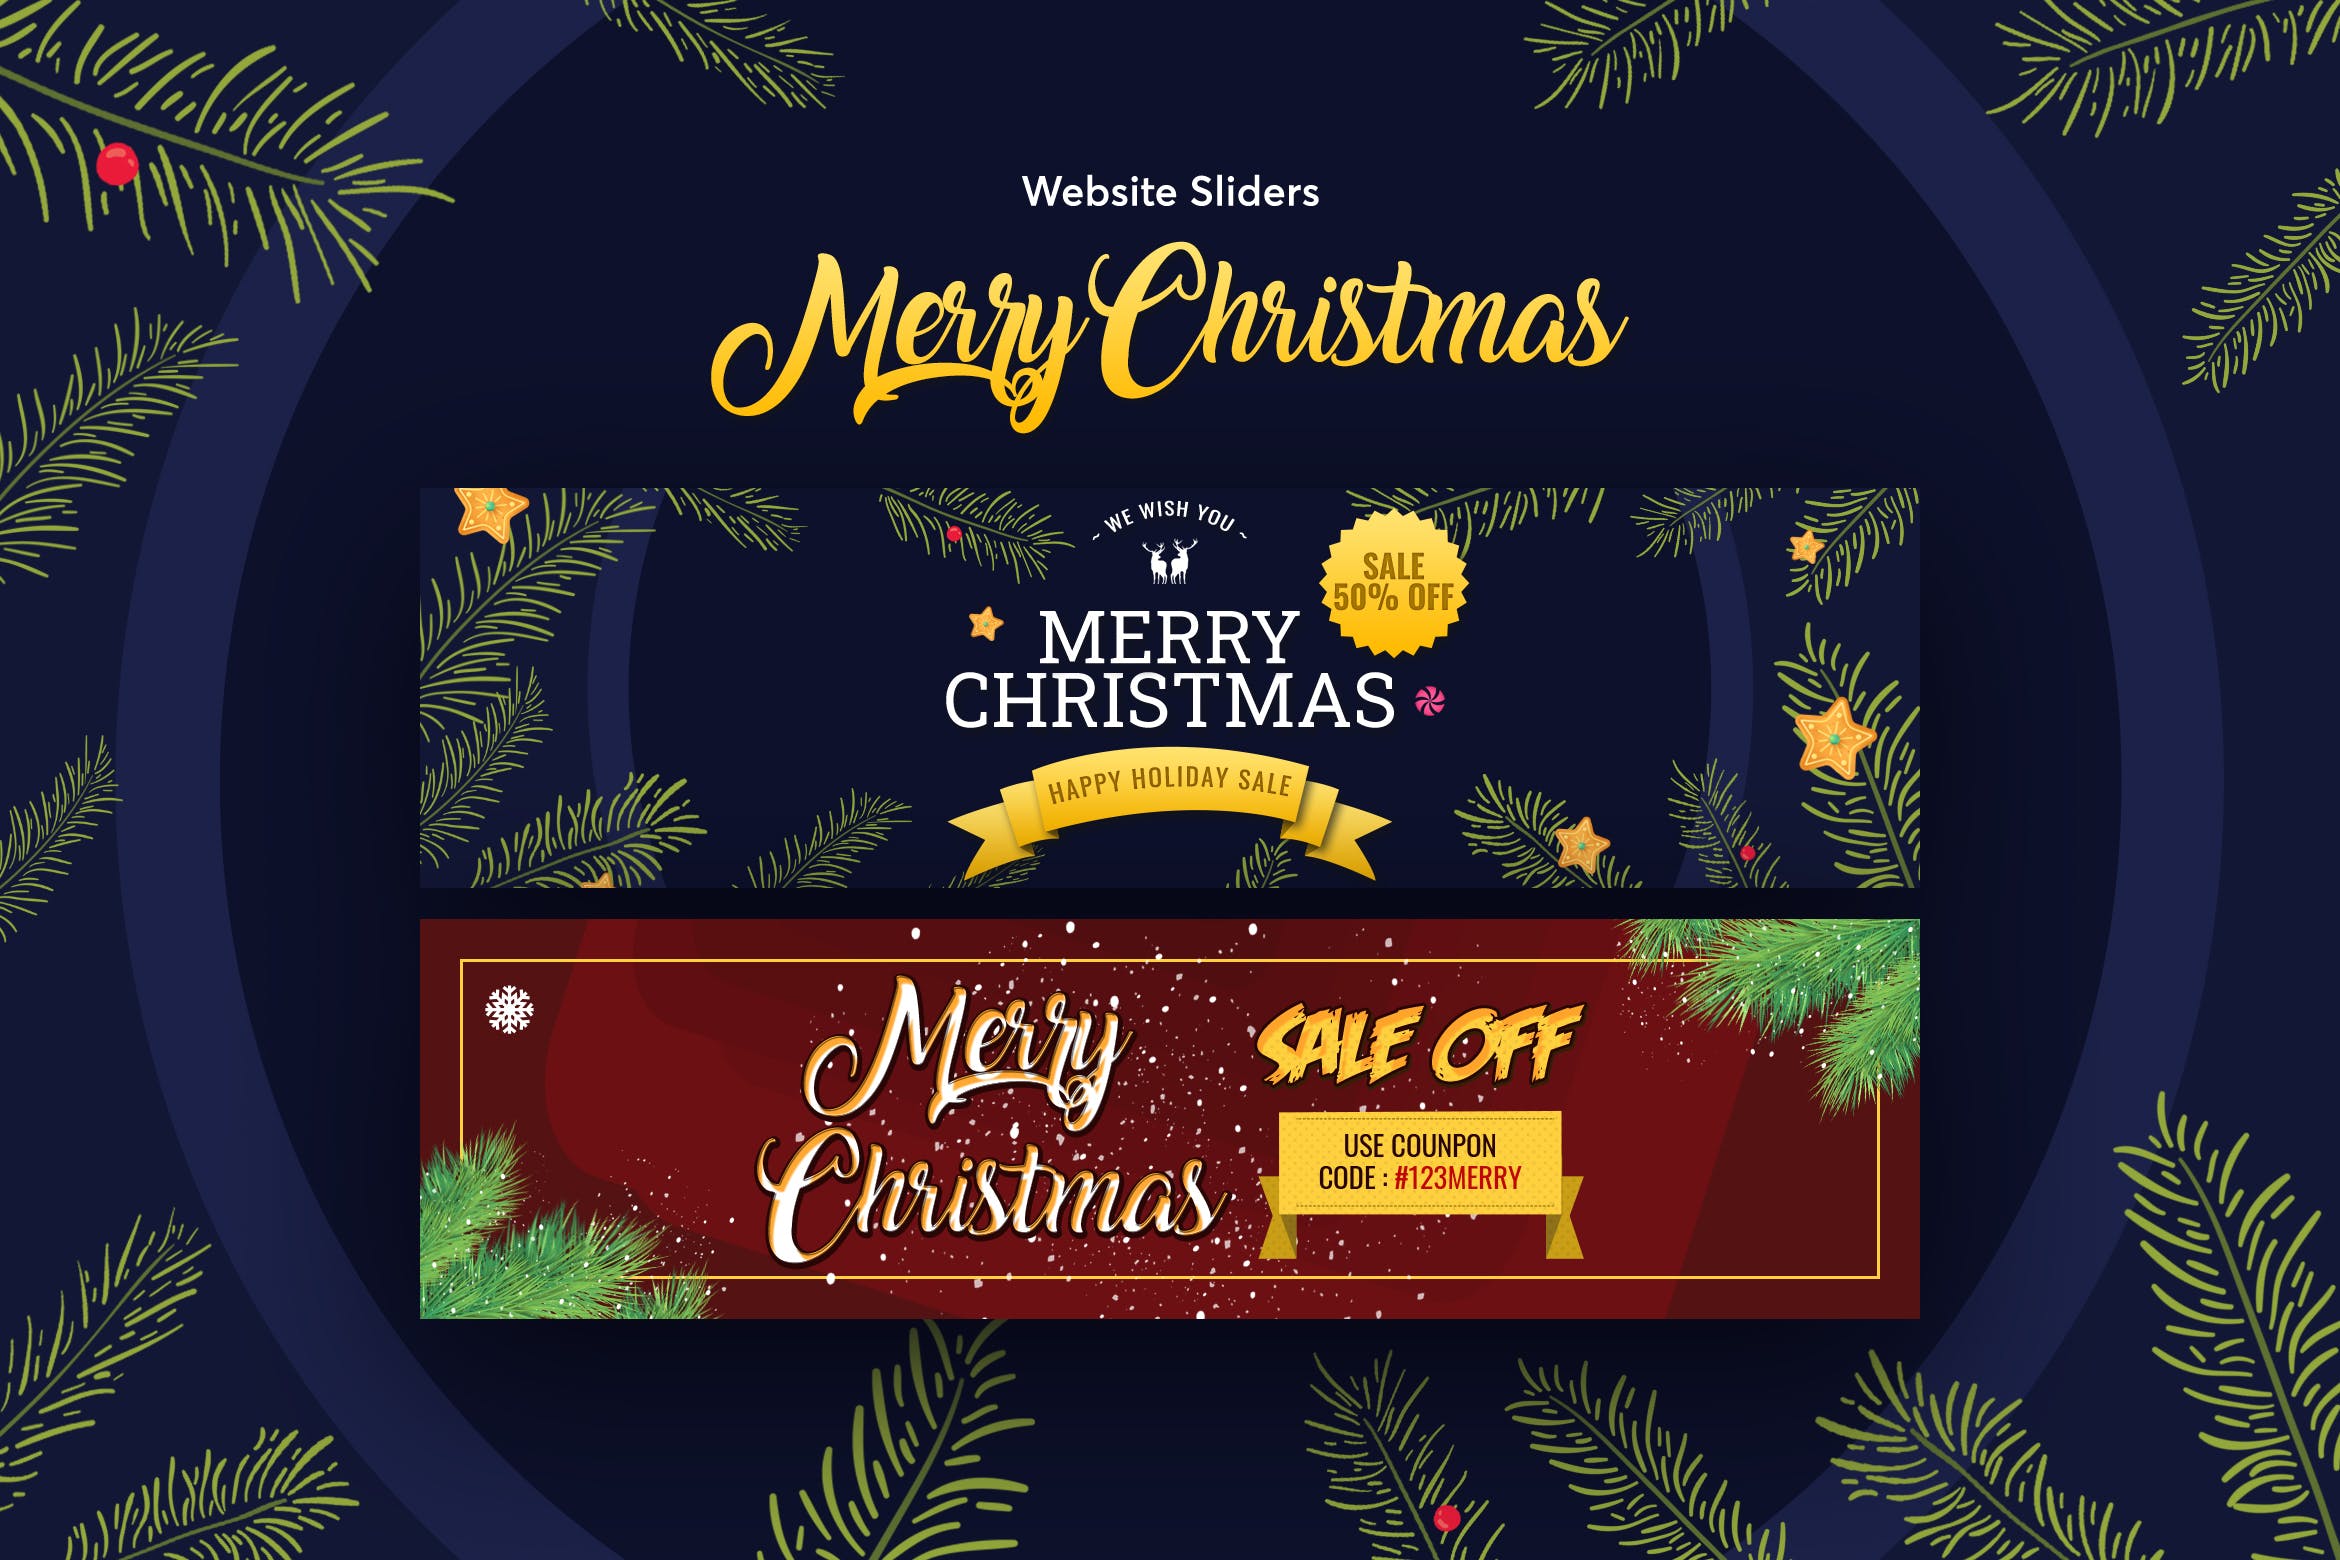 圣诞节焦点图广告Banner设计模板 Merry Christmas Sliders插图